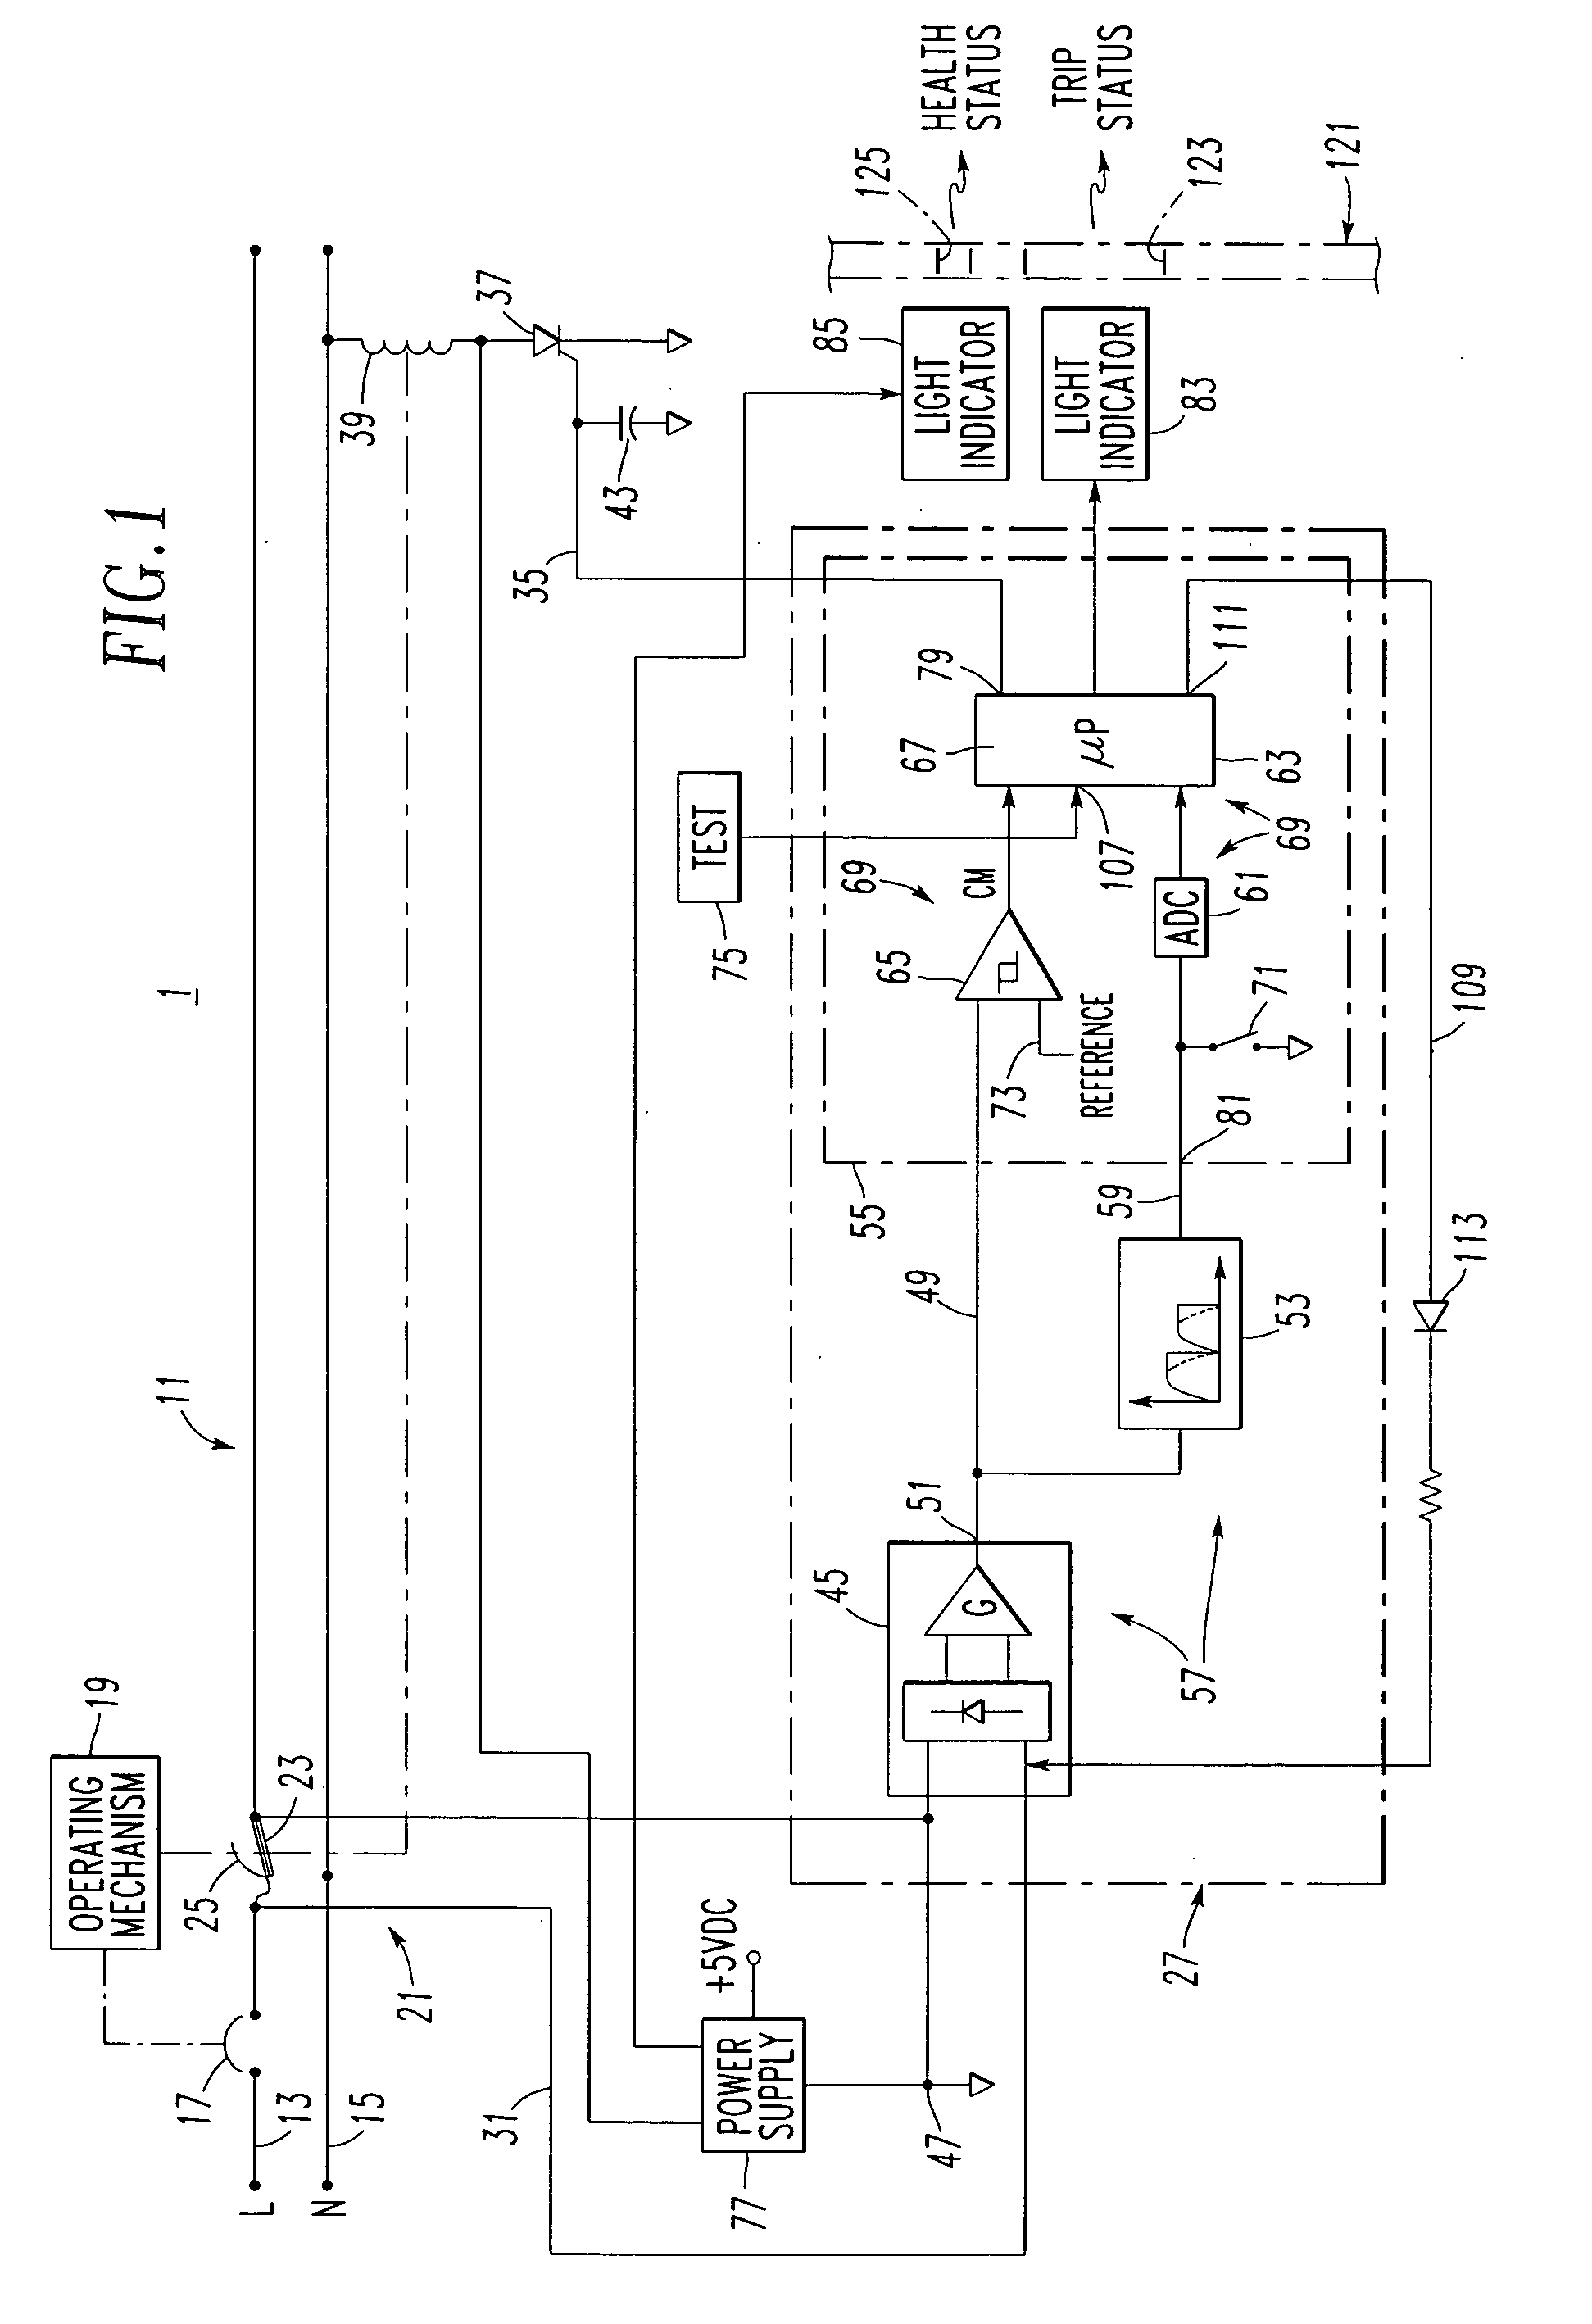 Electrical switching apparatus indicating status through panel aperture